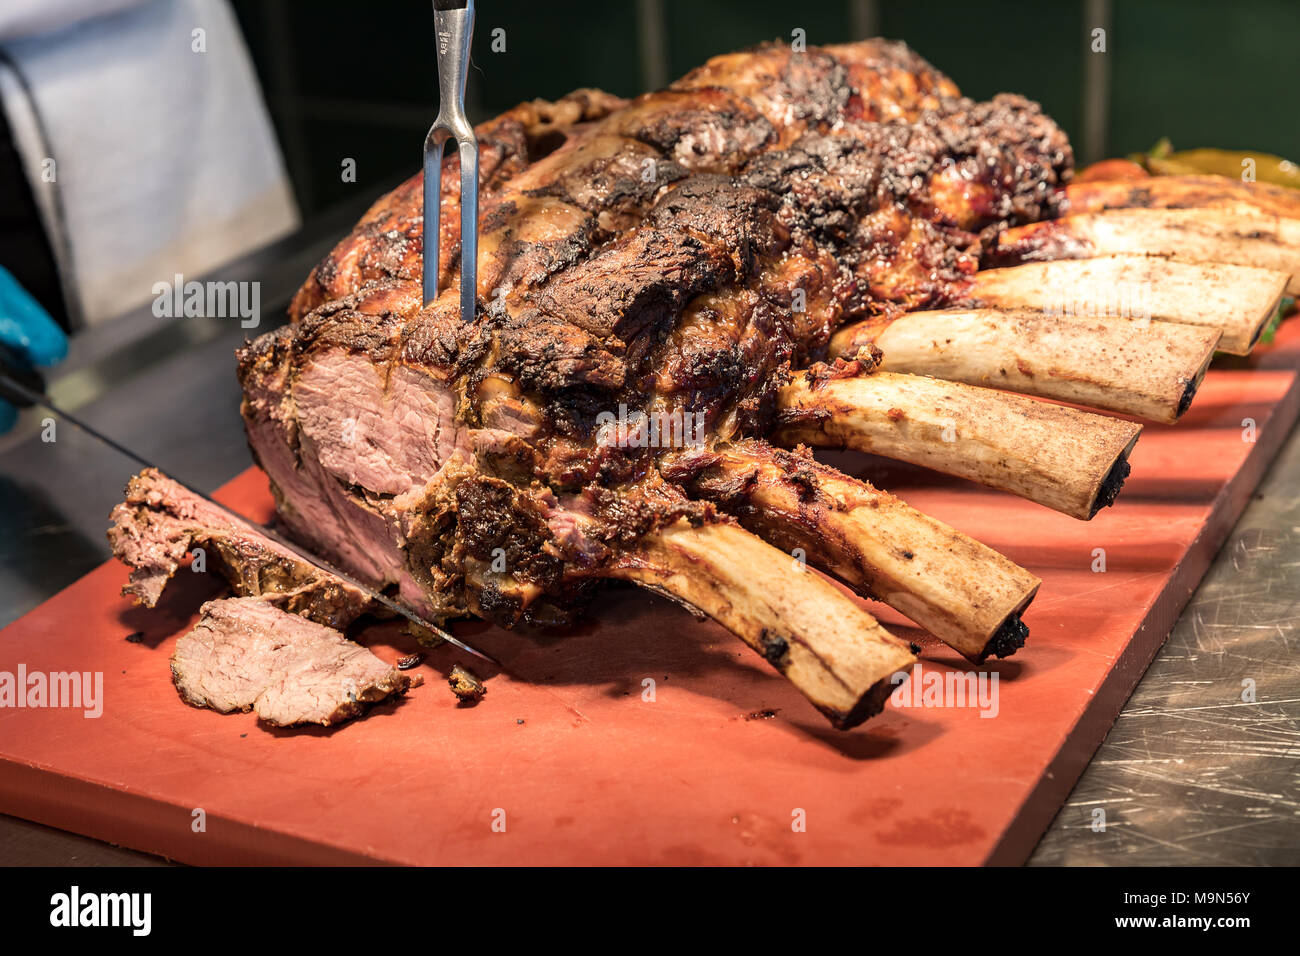 https://c8.alamy.com/comp/M9N56Y/chef-carving-prime-rib-of-roast-wagyu-beef-M9N56Y.jpg